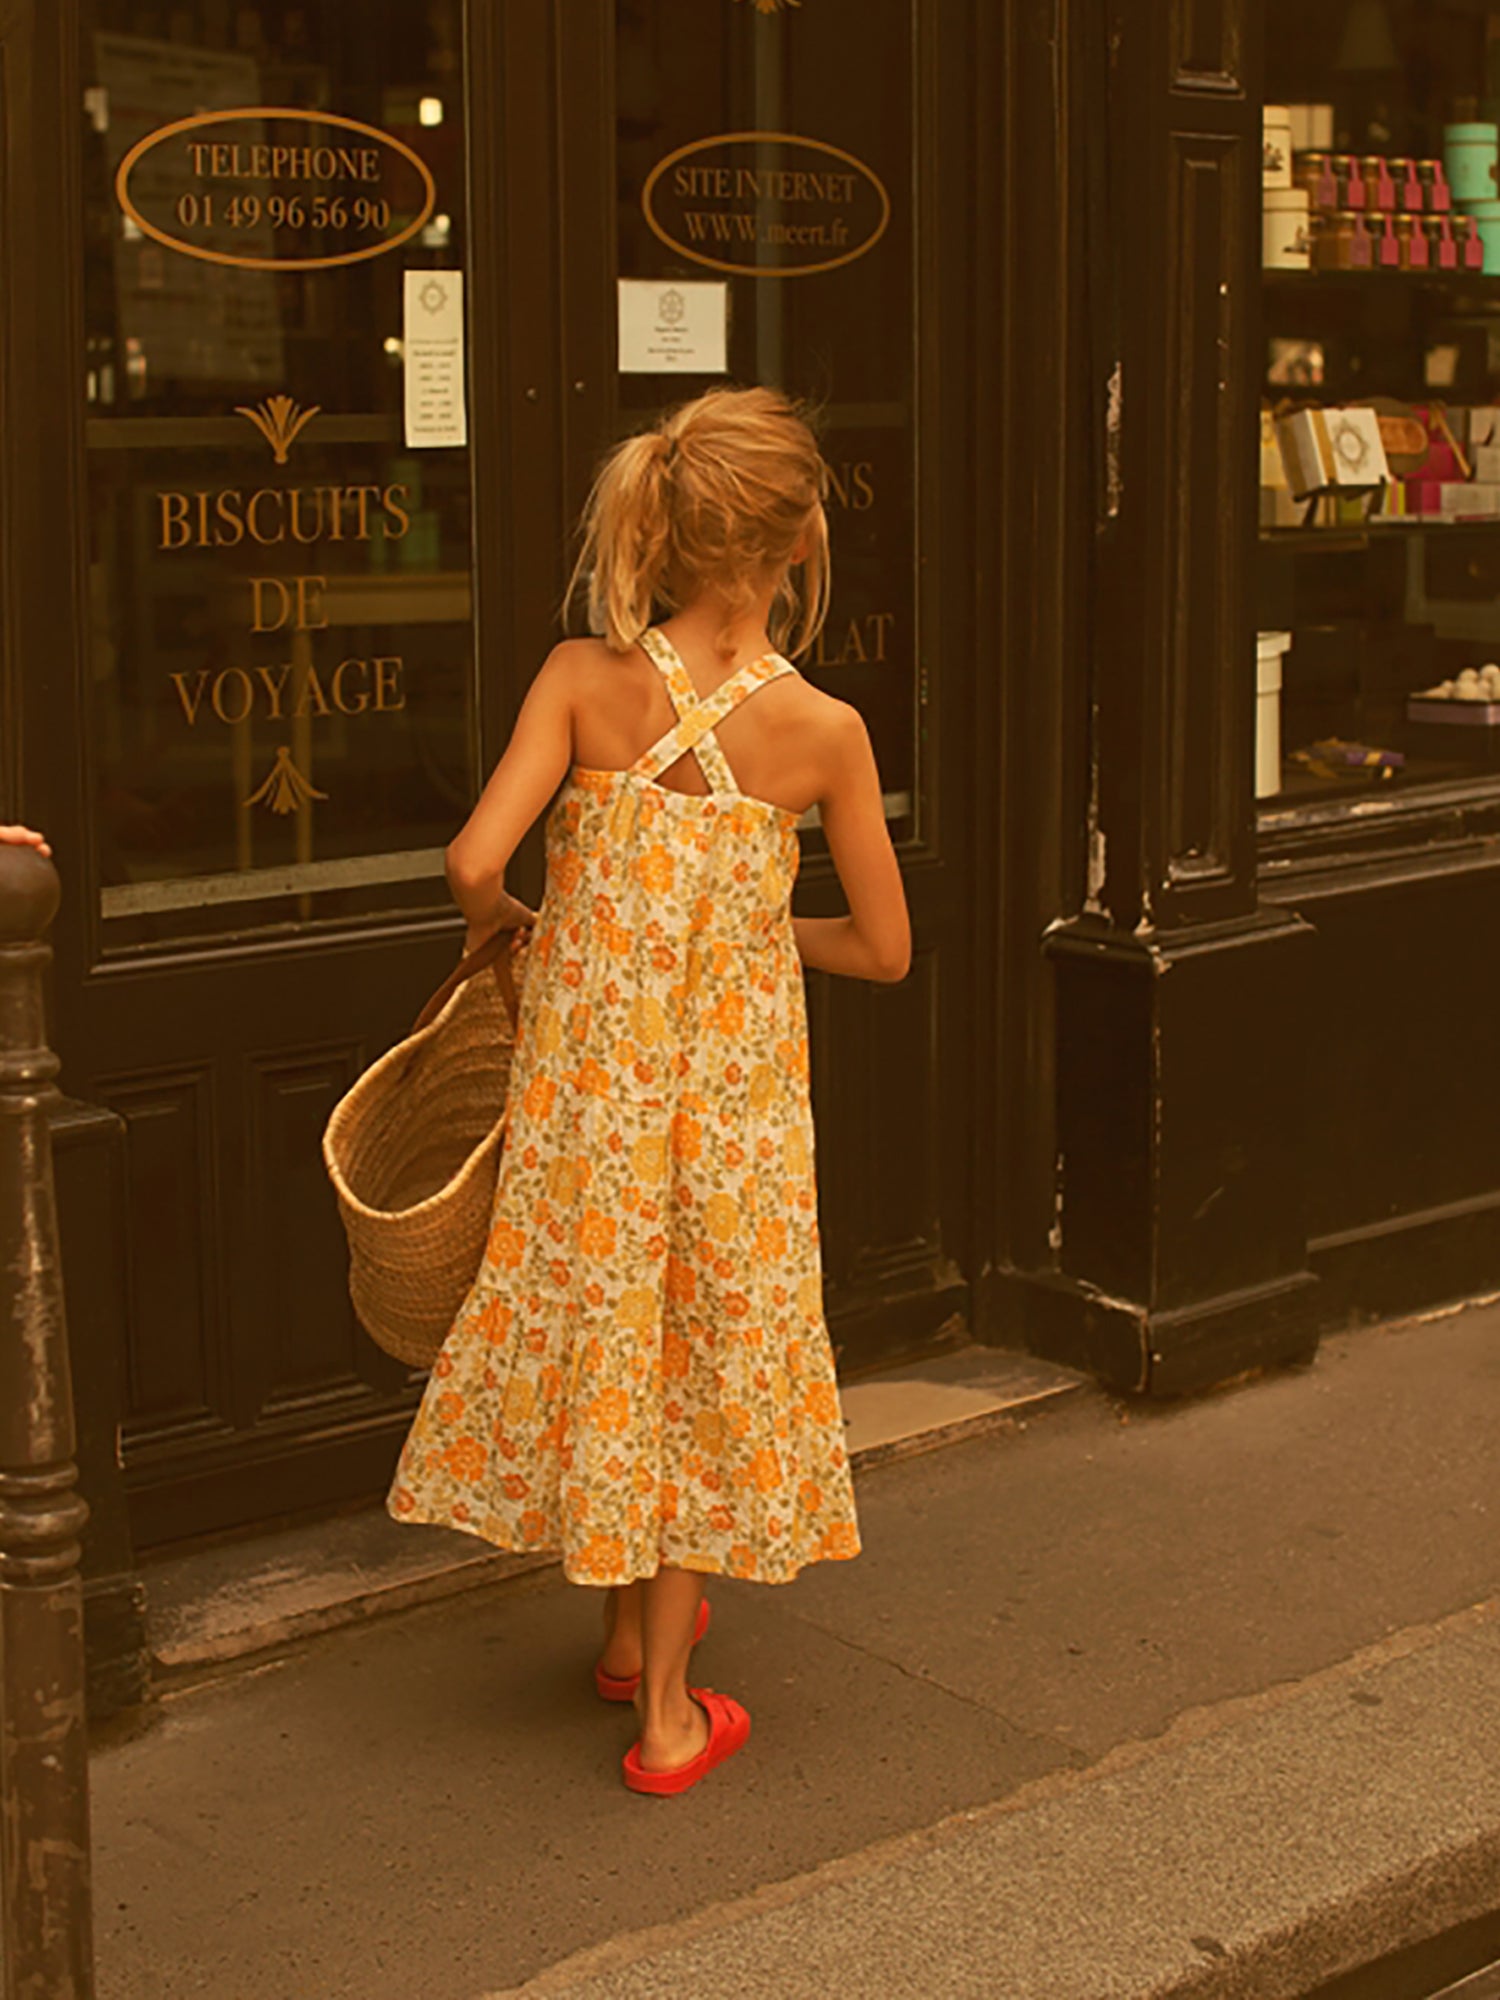 Louis Louise Carinoux Lurex Stripe Vintage Flower Dress - Dresses